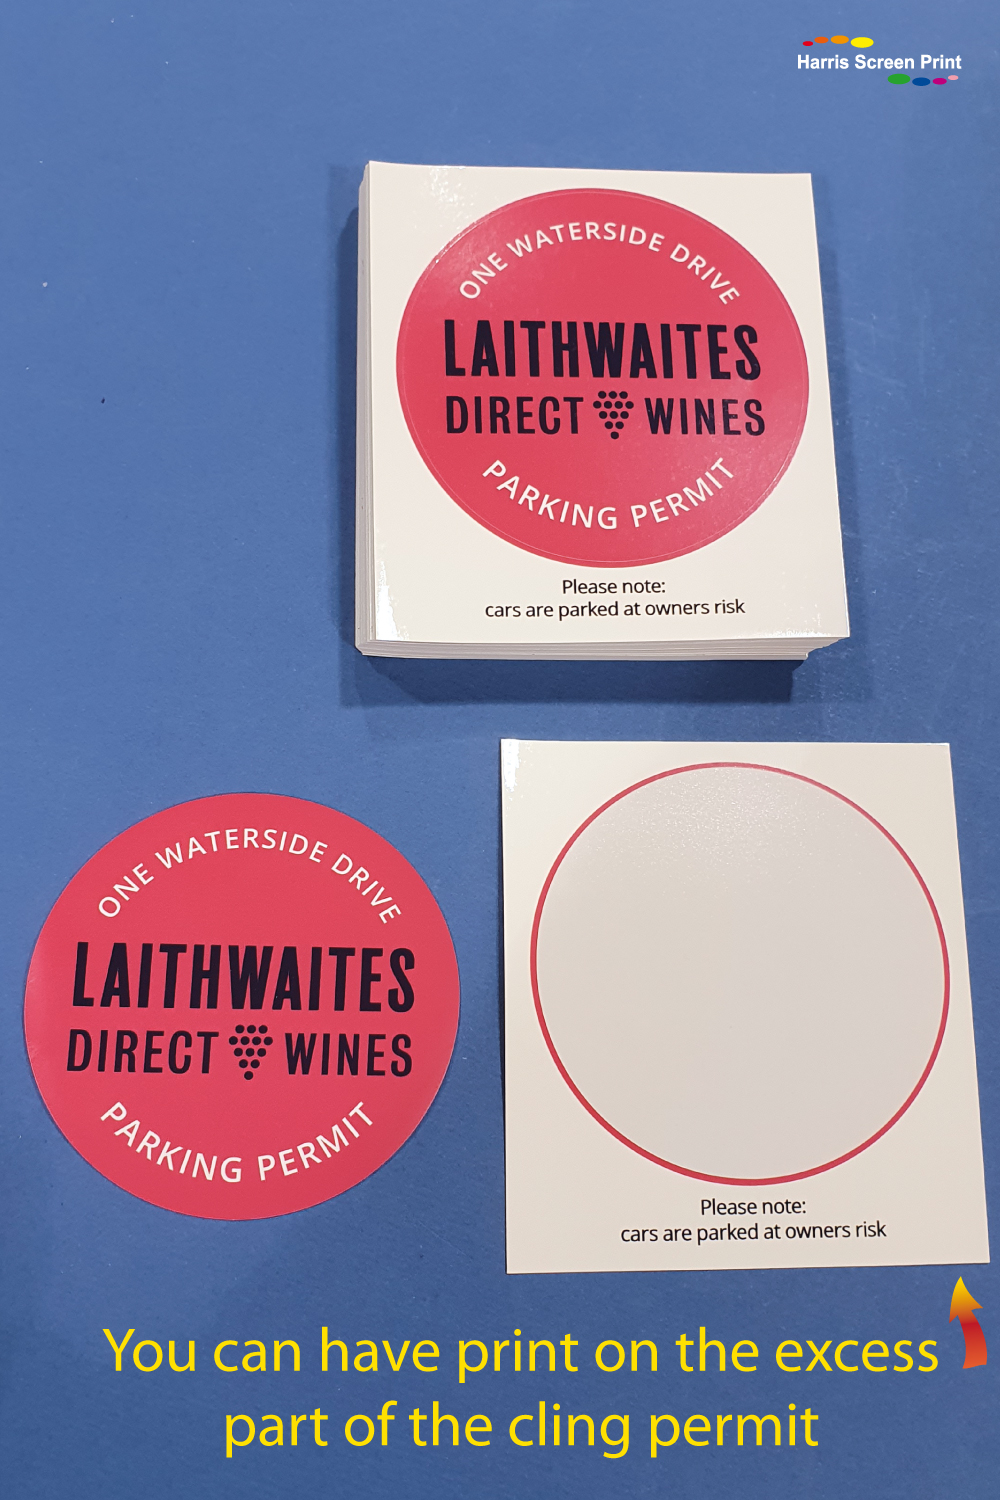 Car park permits printed for Laithwaites Wines